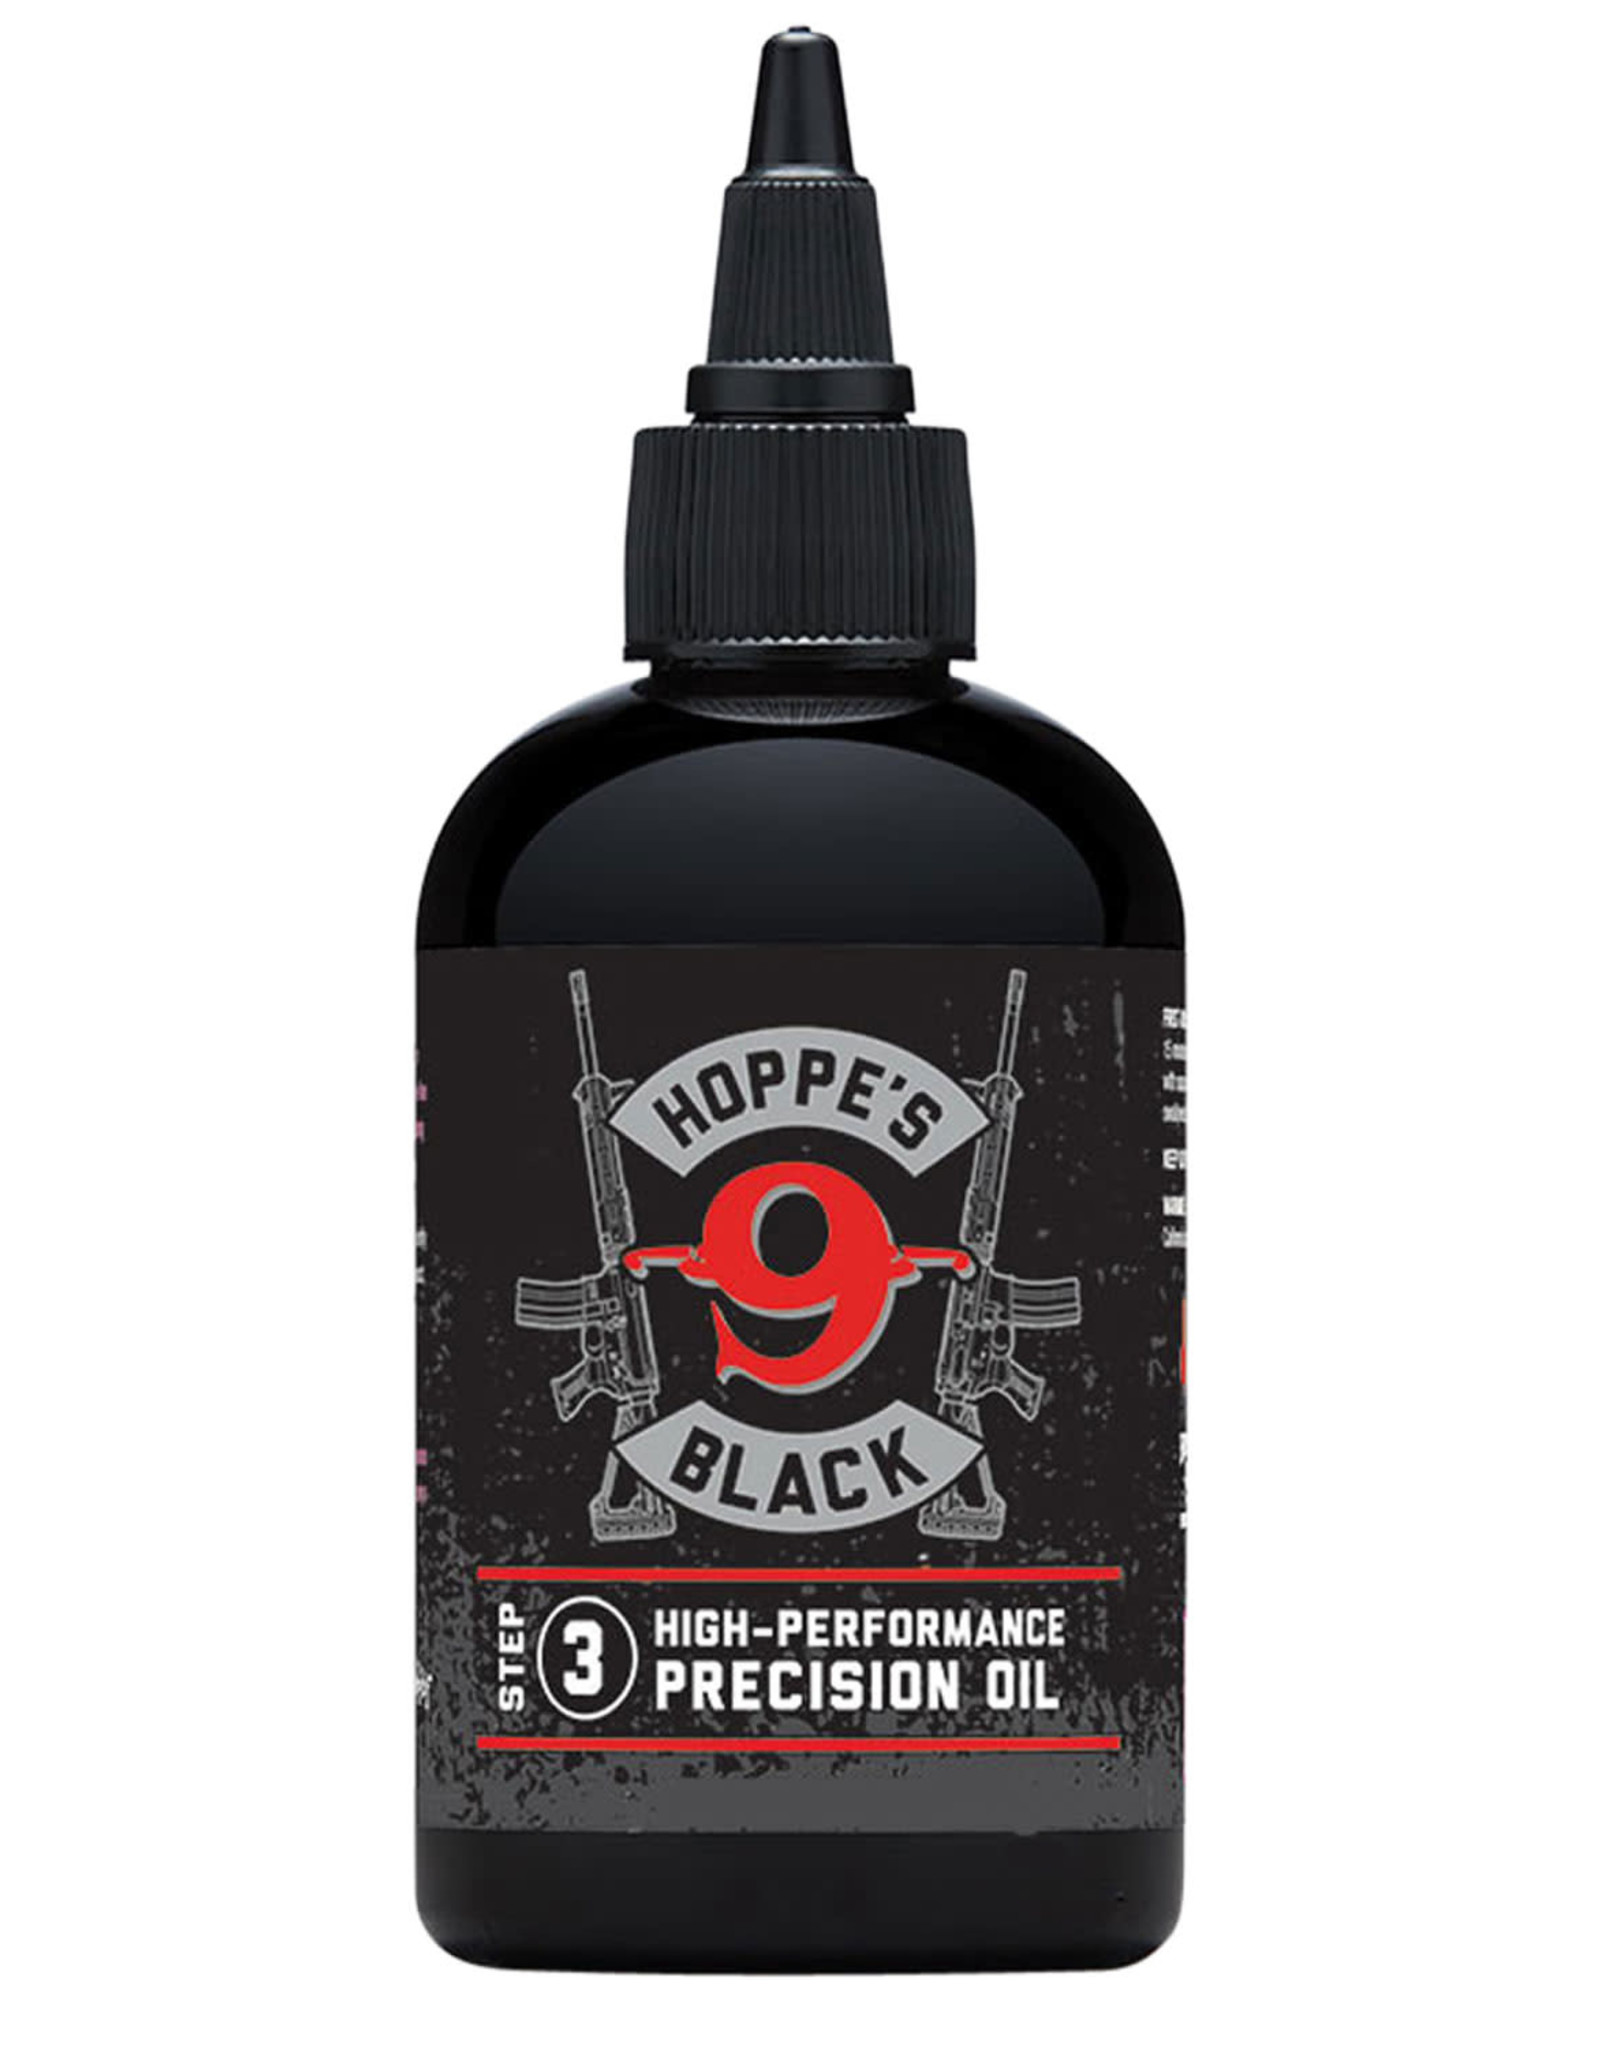 Hoppe's Black - High Performance Precision Oil - Step 3 - 2 Oz.